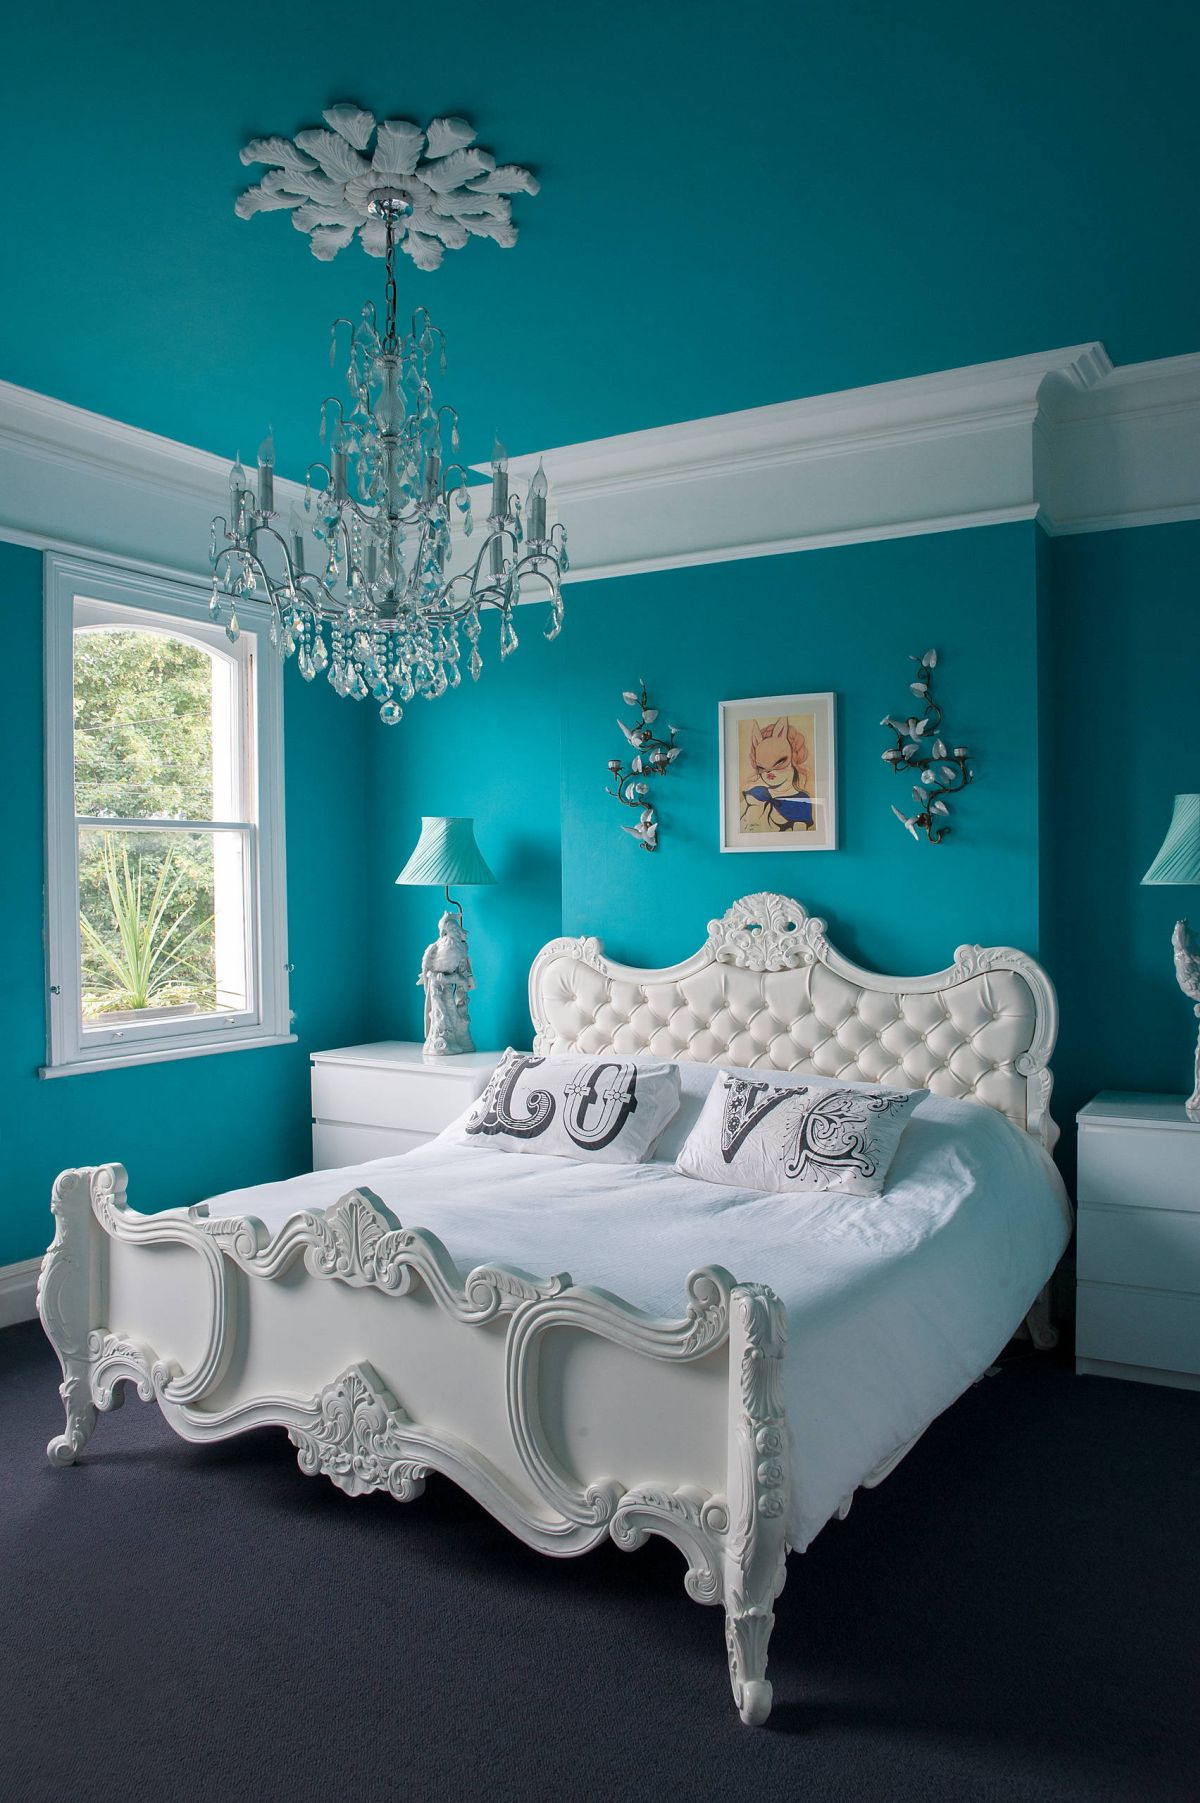 Good Bedroom Paint Colours
 The Four Best Paint Colors For Bedrooms